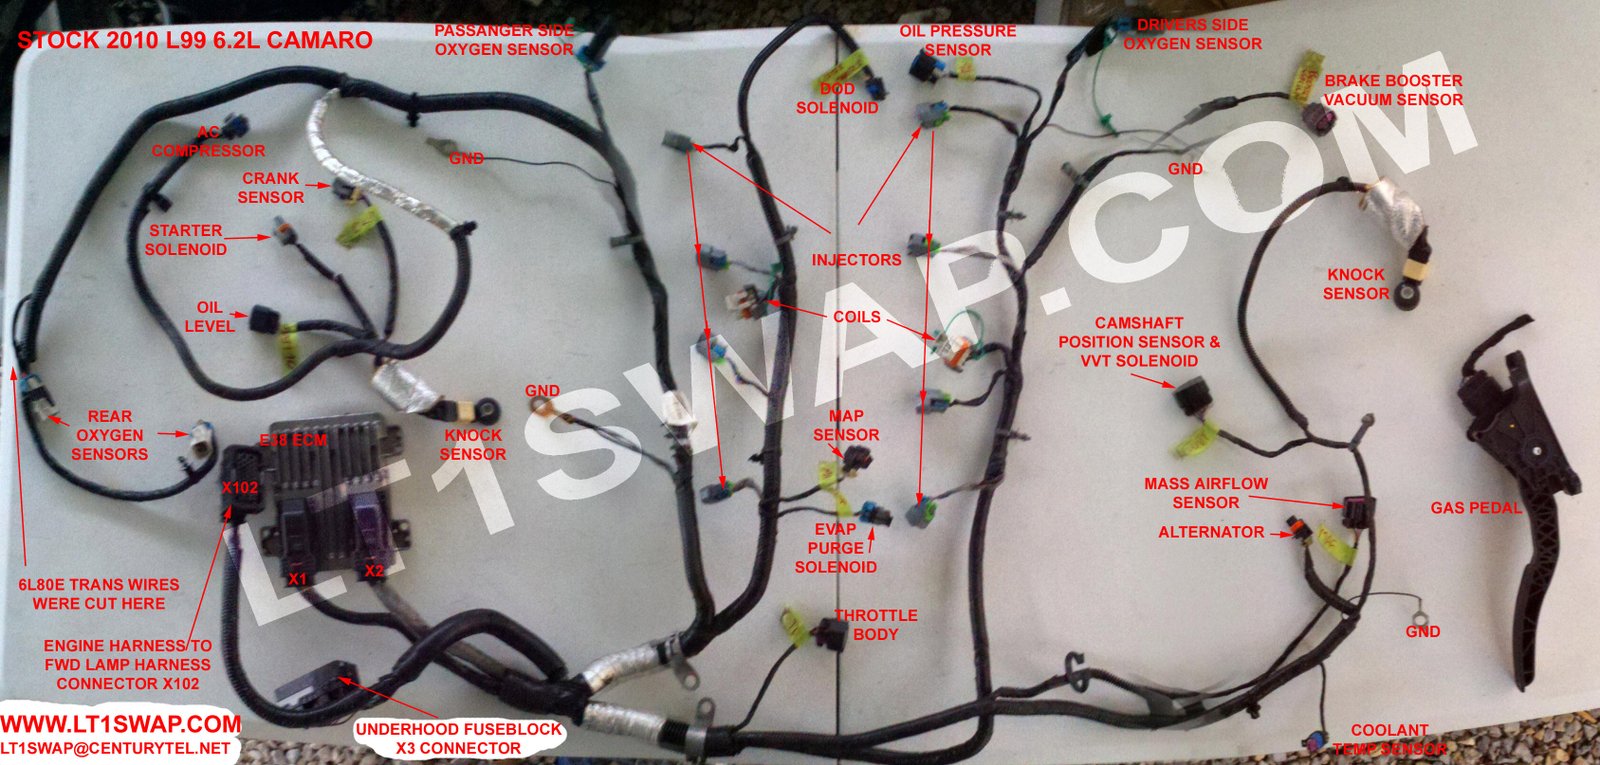 swap wiring harness rewire service ls1 ls2 6.2,6.0,5.7,5.3,4.8,lt1.